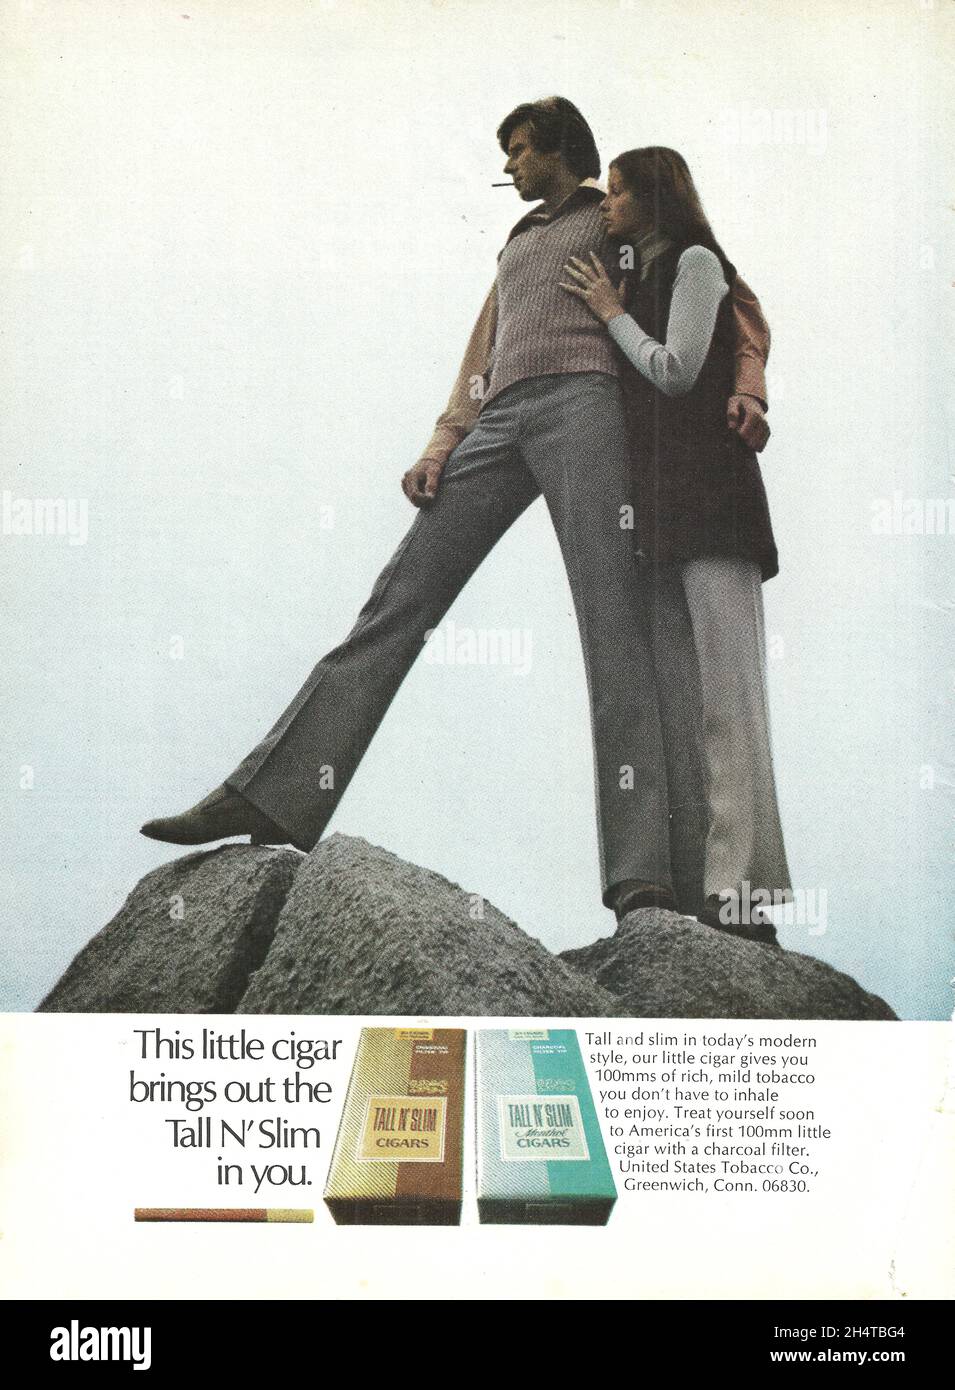 Tall N' Slim cigars vintage advertisement advert ad 1980s 1970s Stock Photo